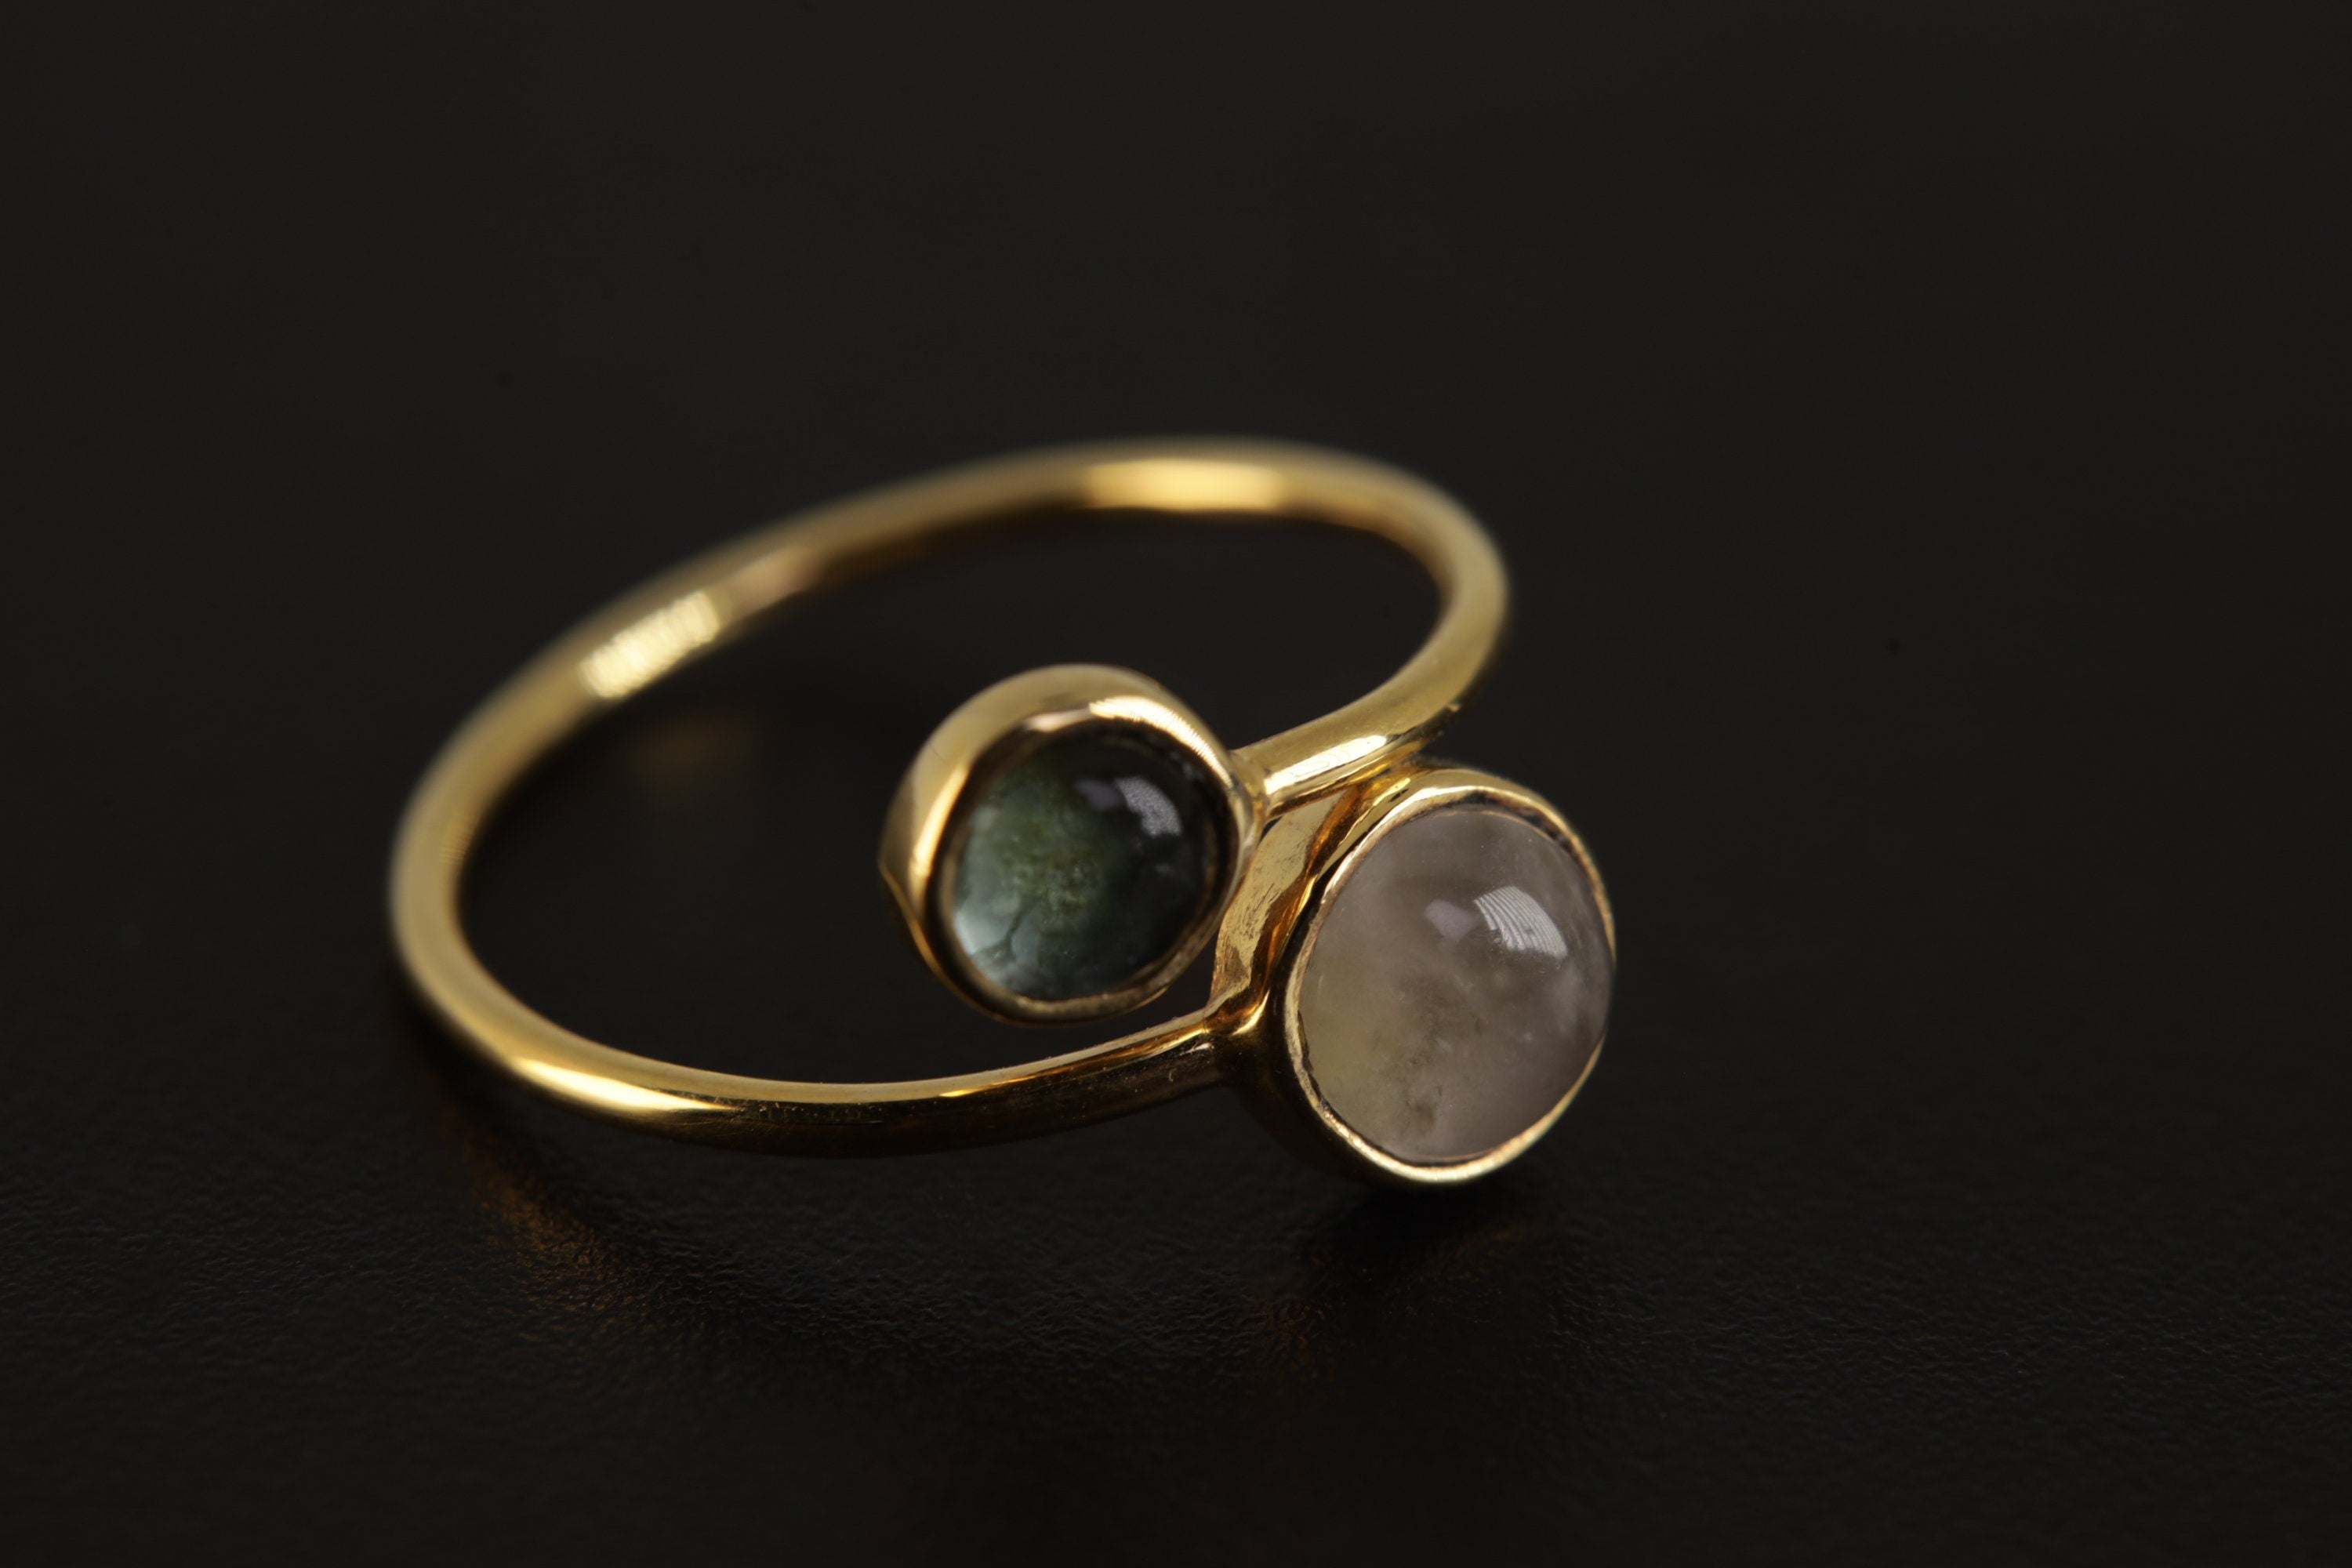 Golden Eclipse Adjustable Ring - Gold Plated Sterling Silver Ring - Labradorite & Rose Quartz - Unisex - Size 5-12 US